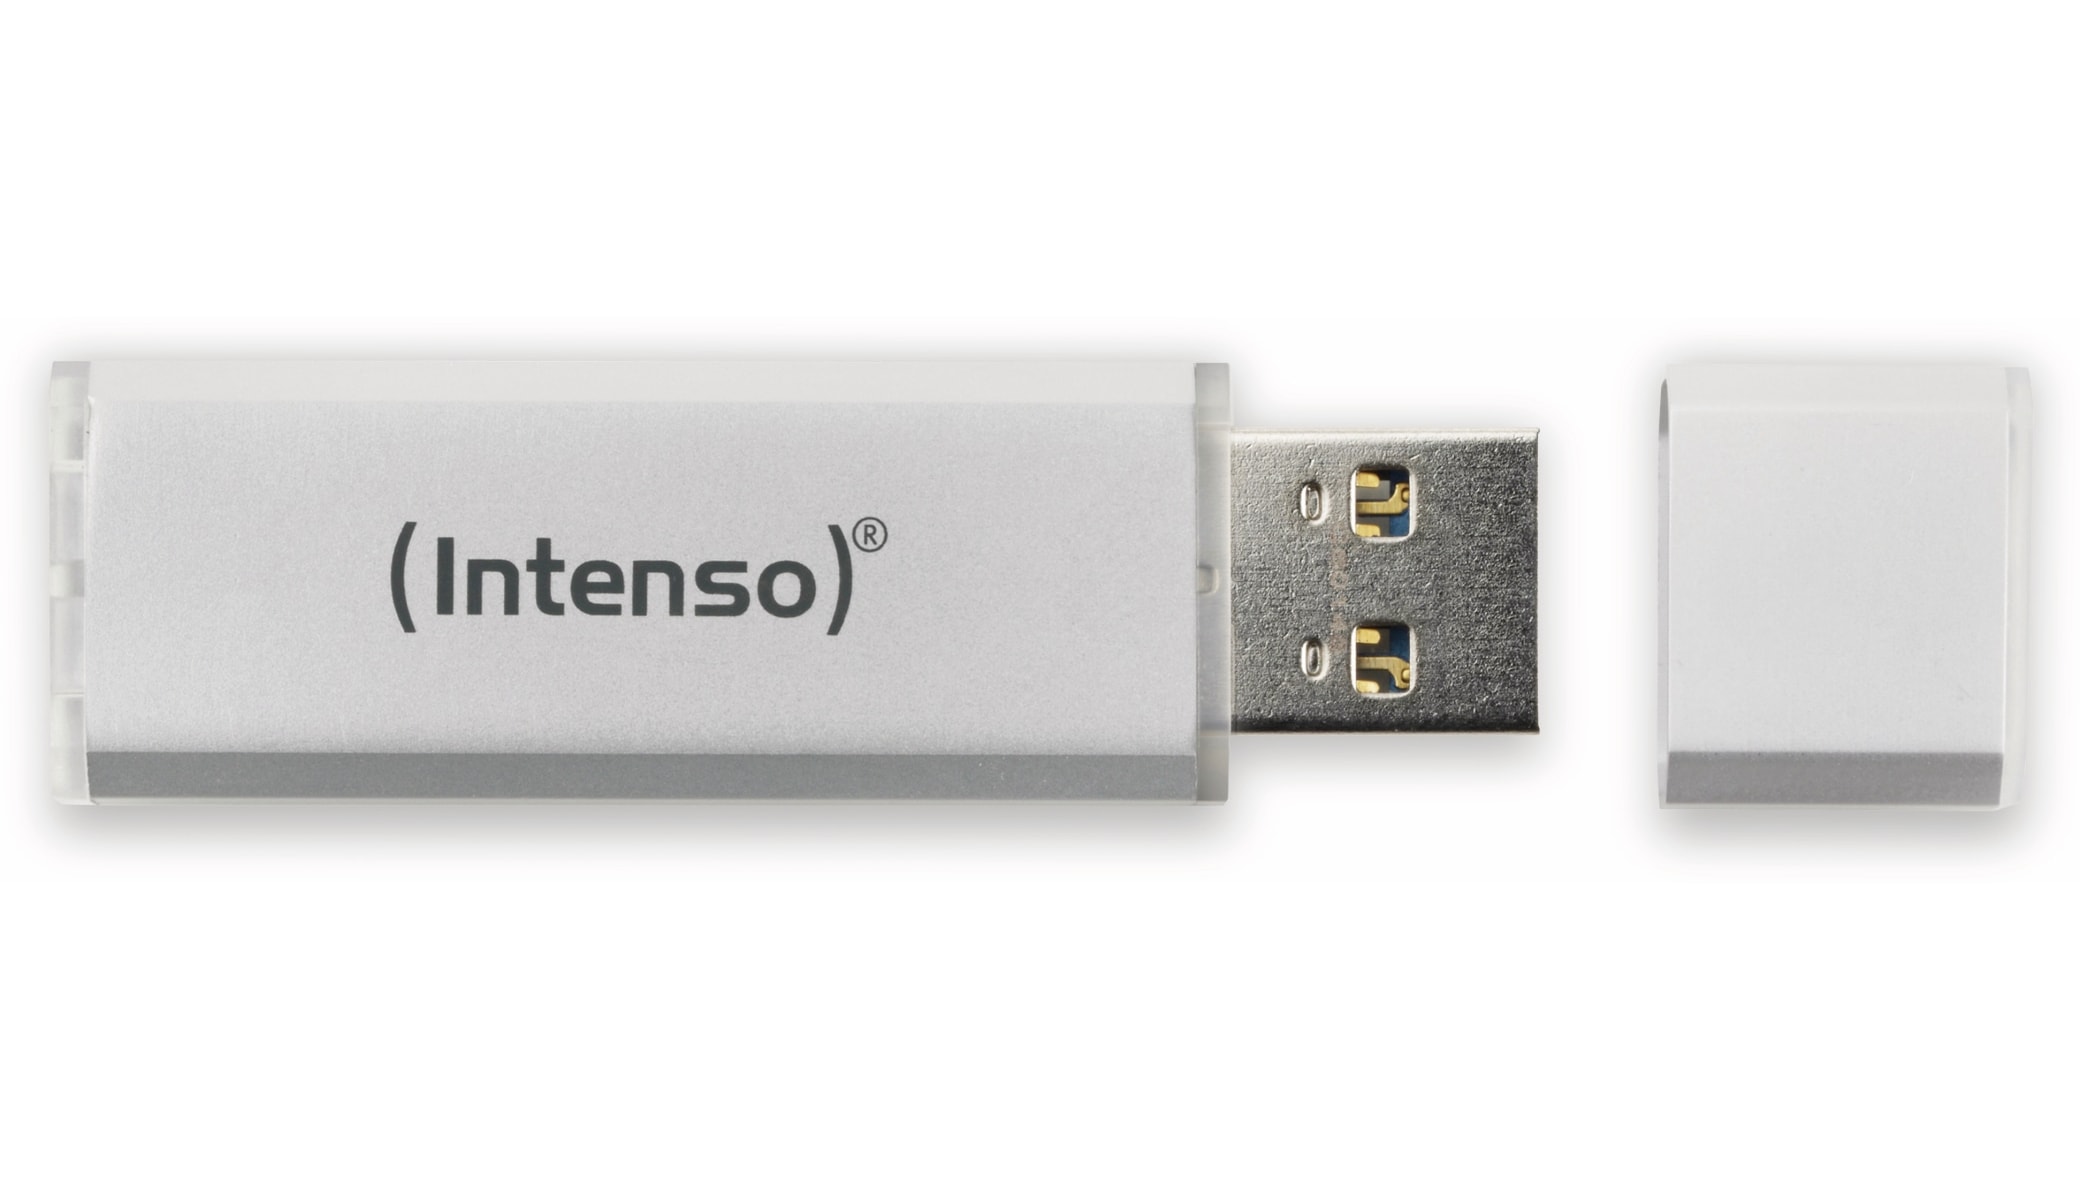 INTENSO USB 3.0 Speicherstick Ultra Line, 16 GB